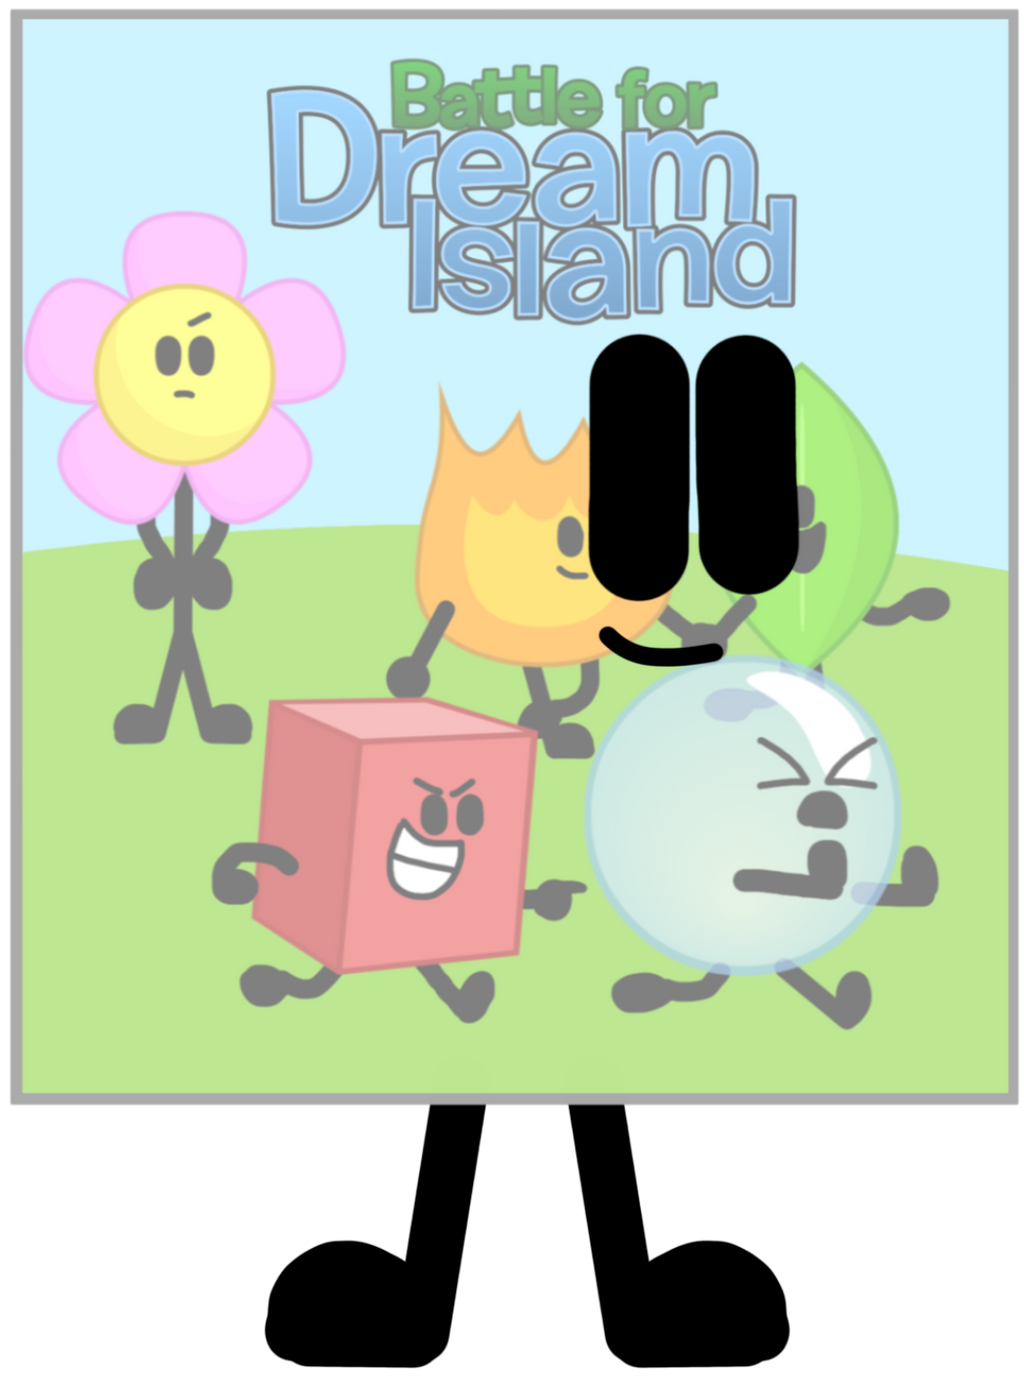 Battle for Dream Island (BFDI) Alphabet by skinnybeans17 on DeviantArt